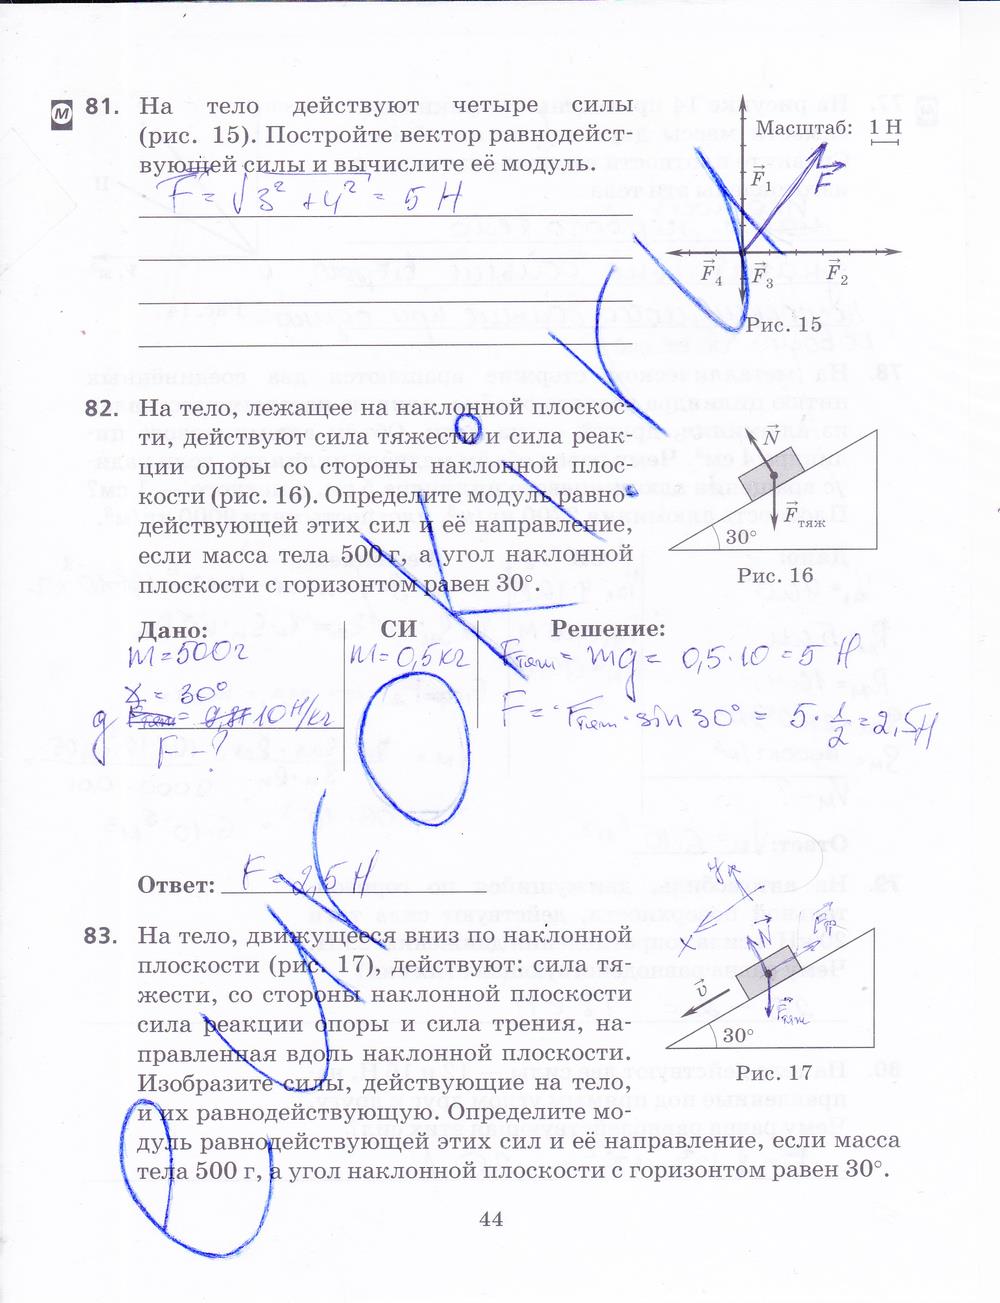 гдз 9 класс рабочая тетрадь страница 44 физика Пурышева, Важеевская, Чаругин